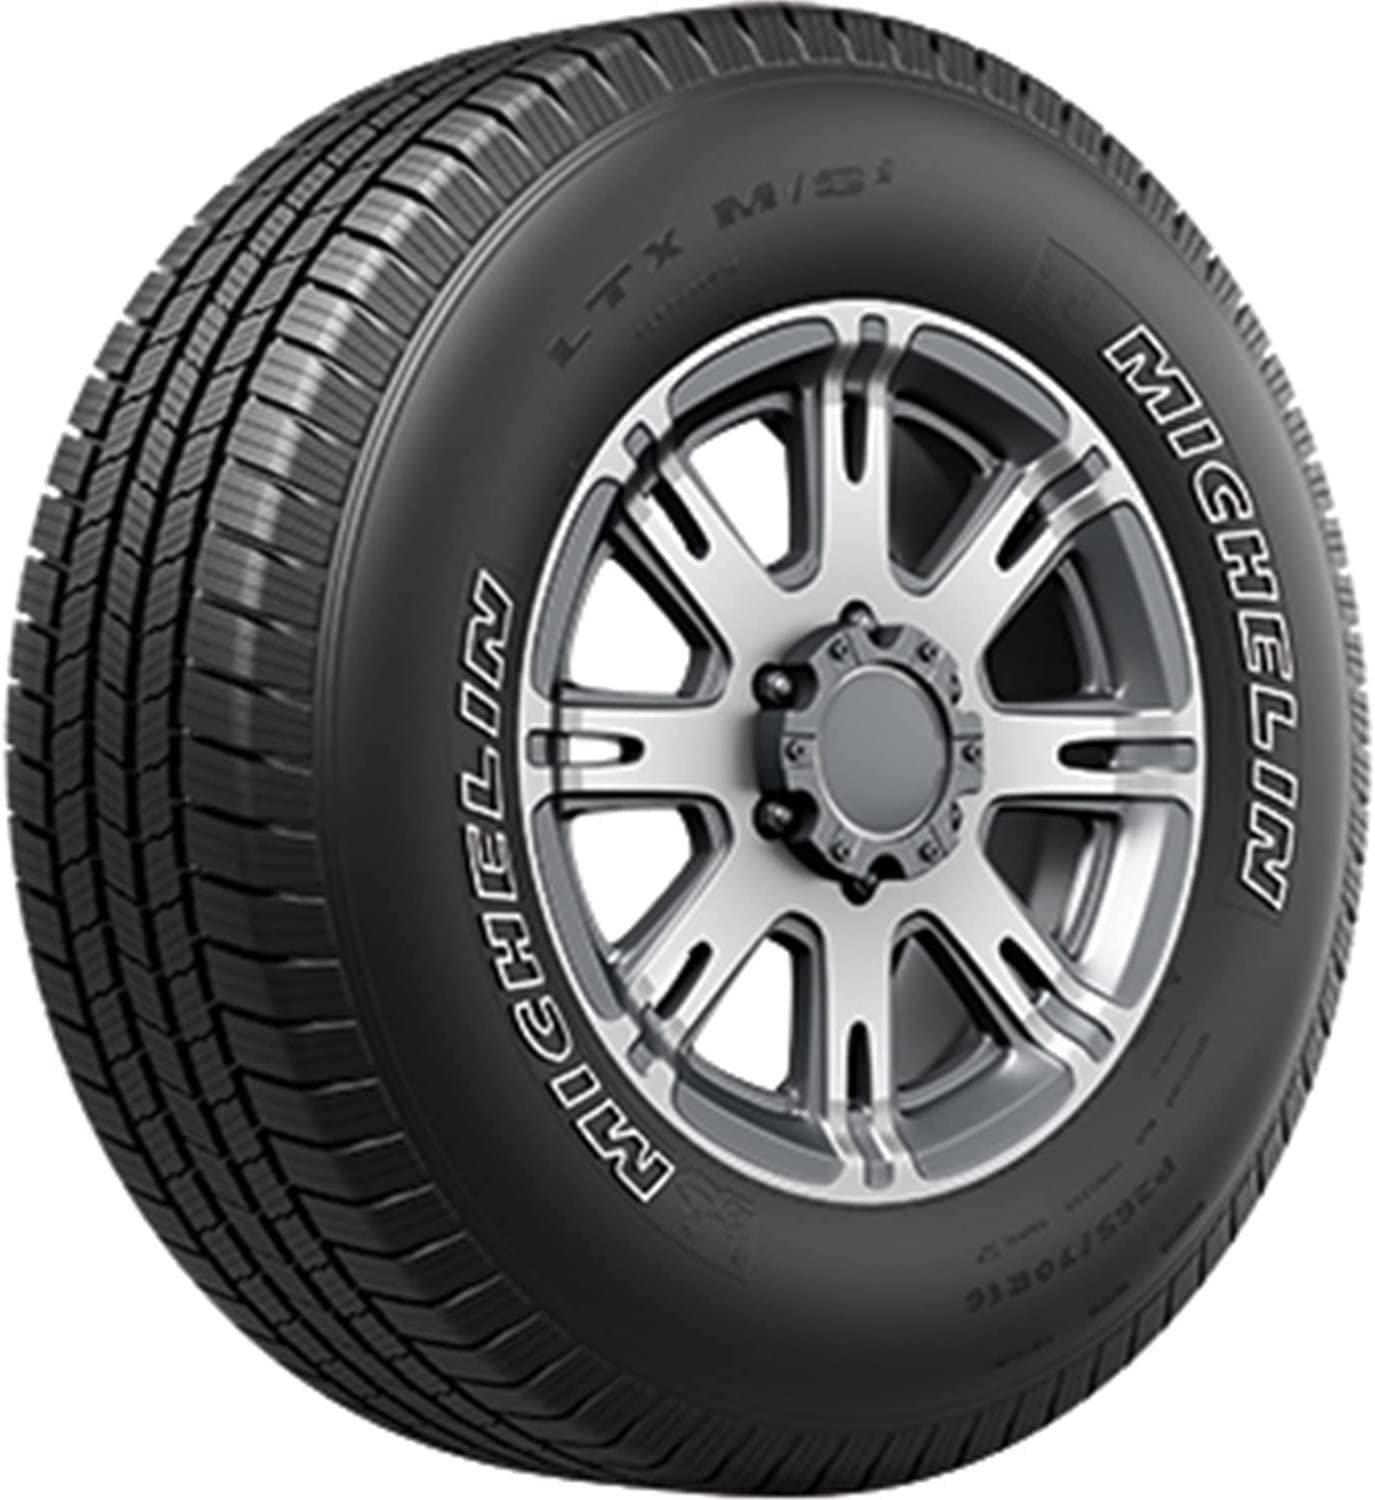 LTX M/S2 All Season Radial Car Tire for Light Trucks, Suvs and Crossovers, 275/5